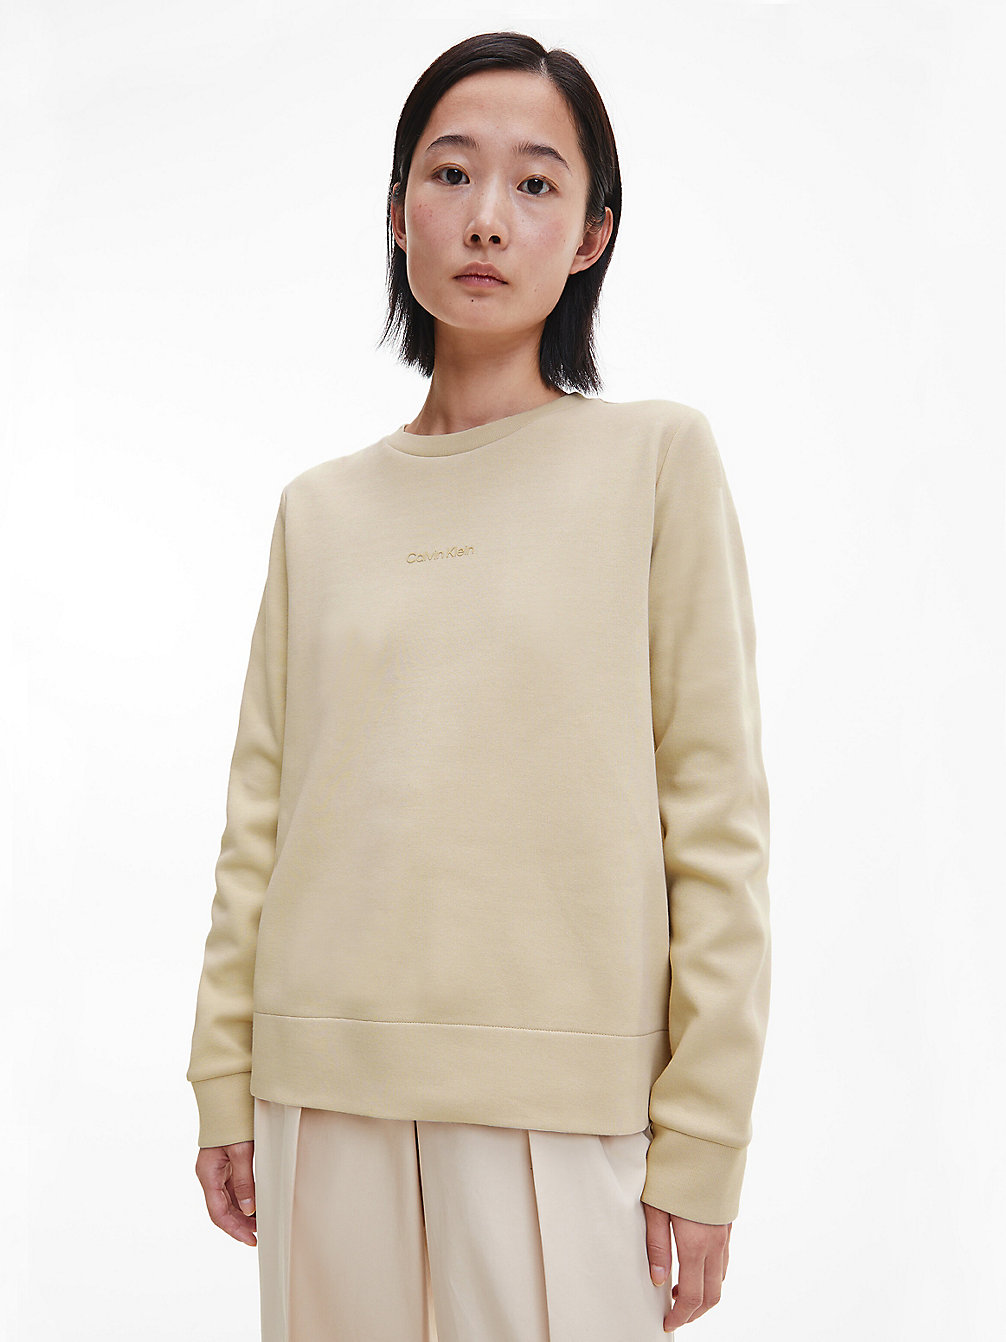 WHITE CLAY Recycled Polyester Sweatshirt undefined women Calvin Klein